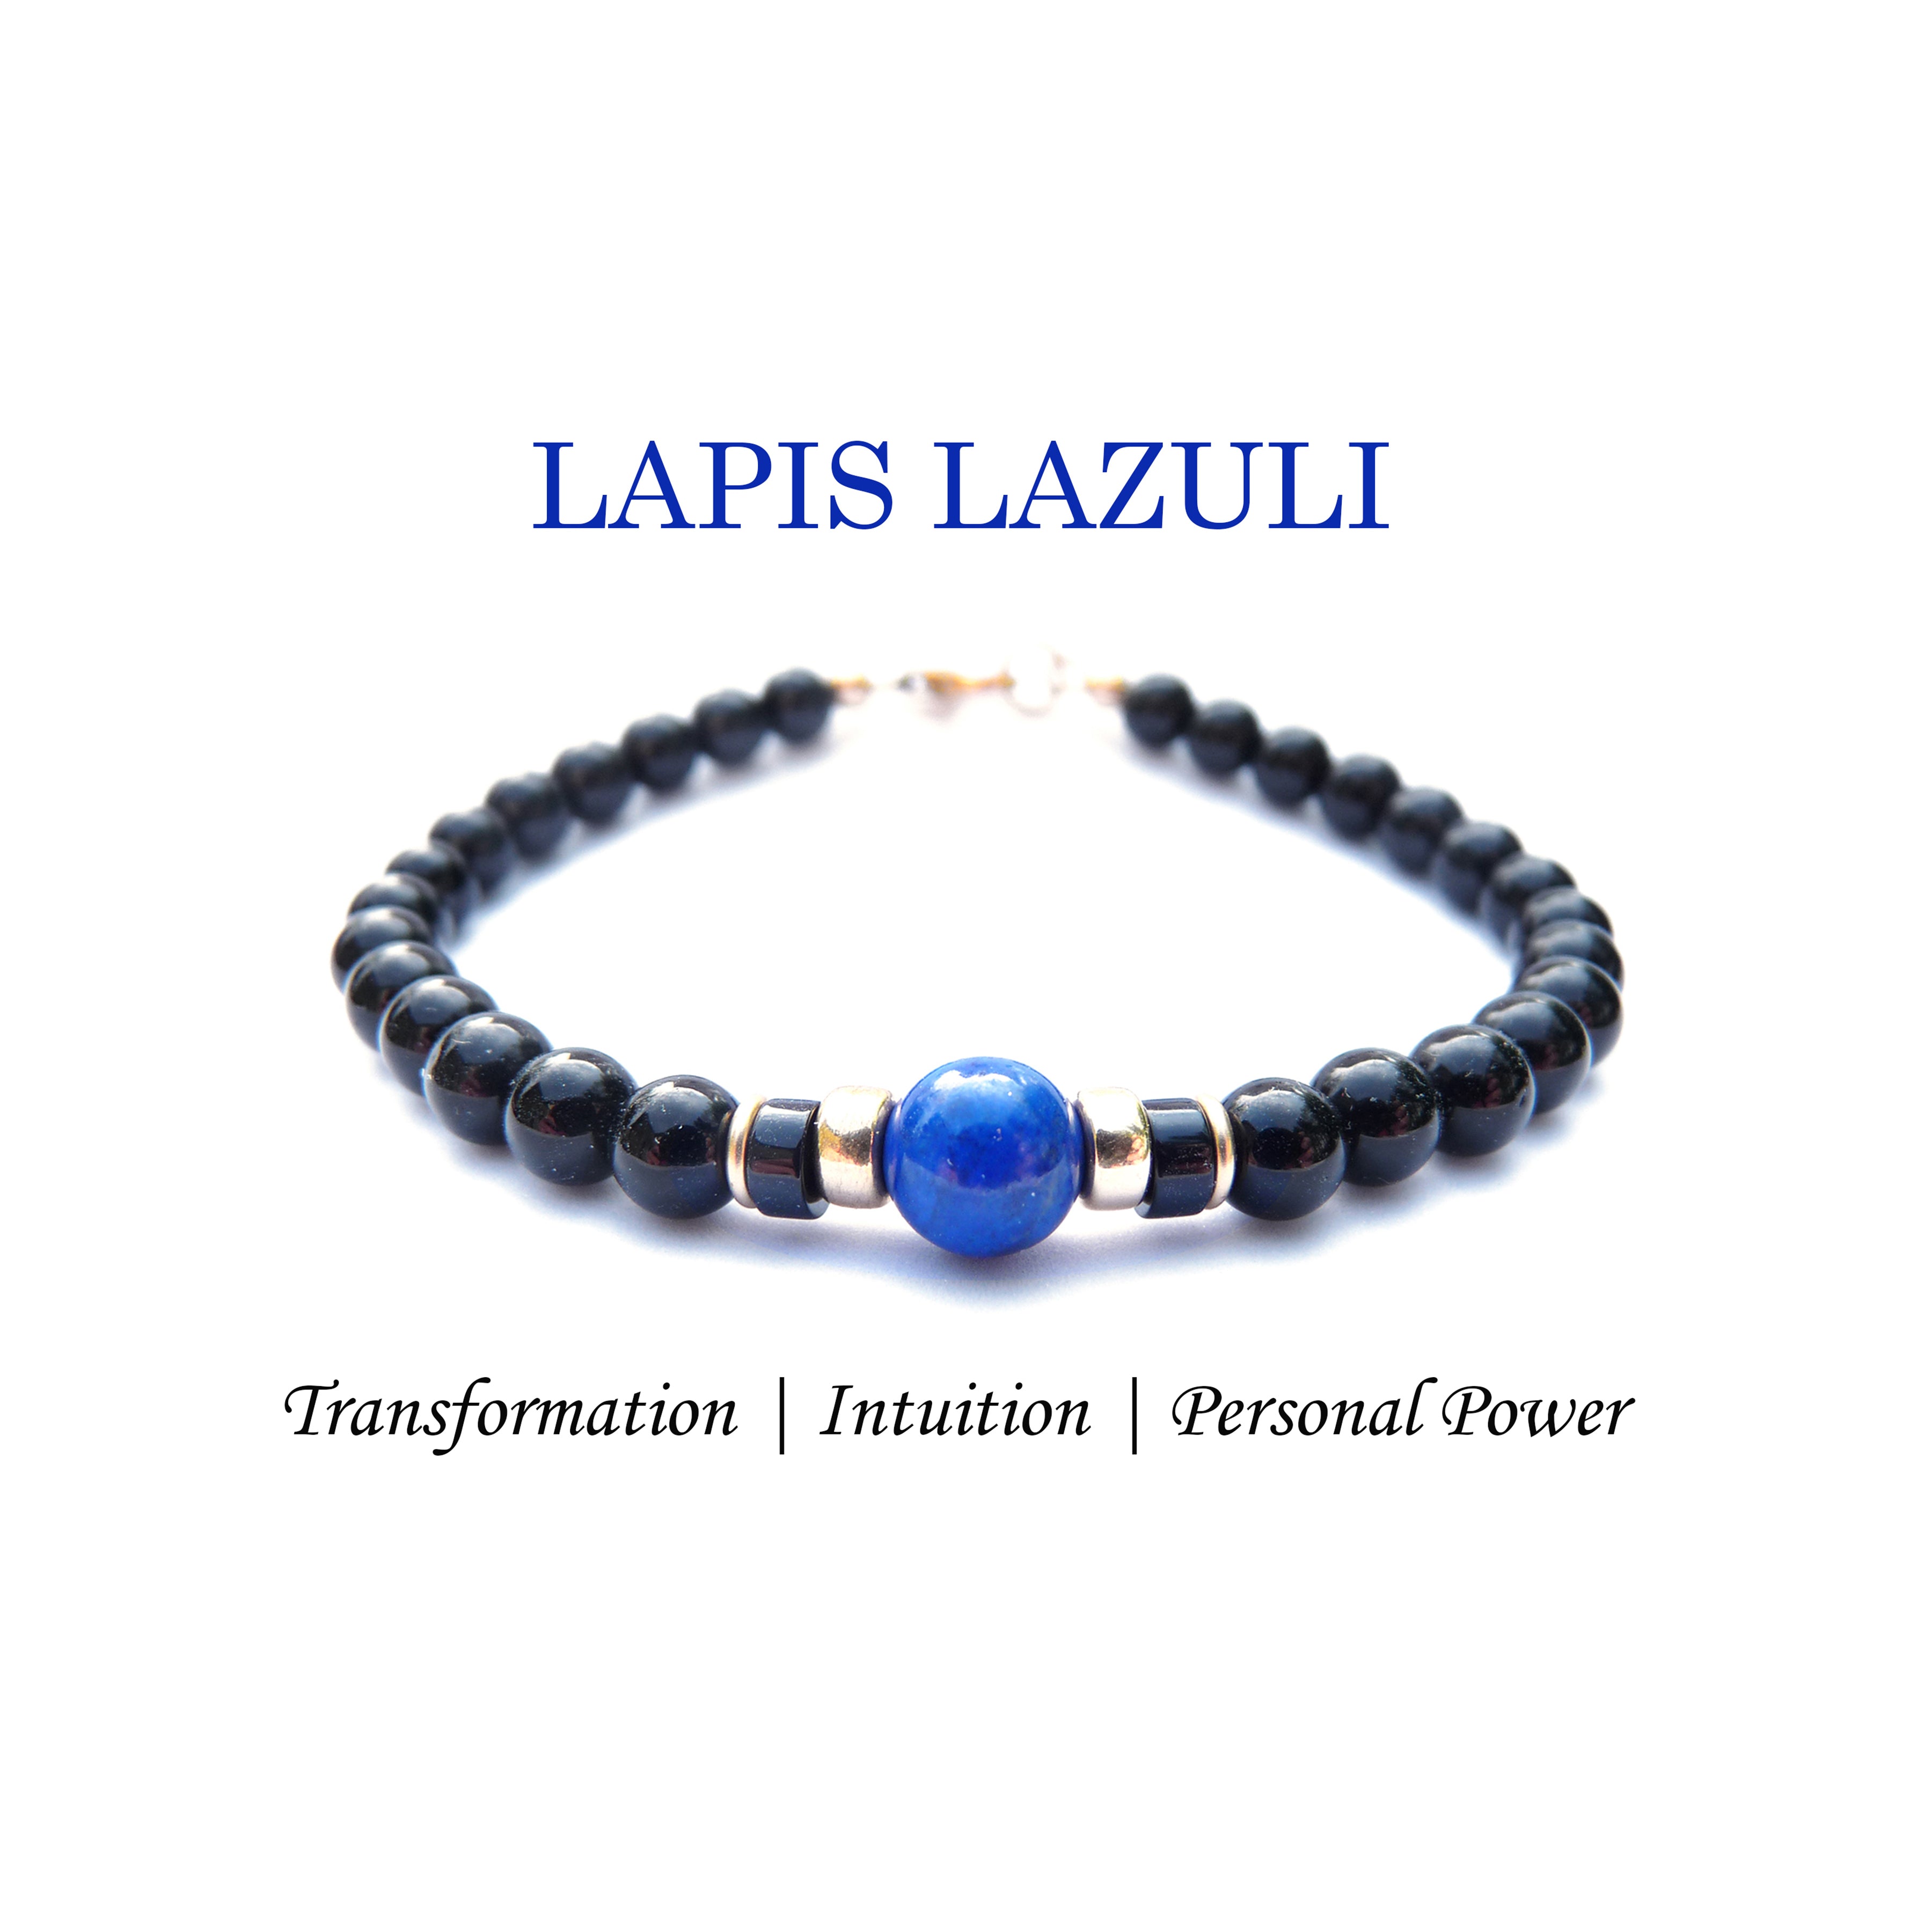 Beginner's Guide to Lapis Lazuli